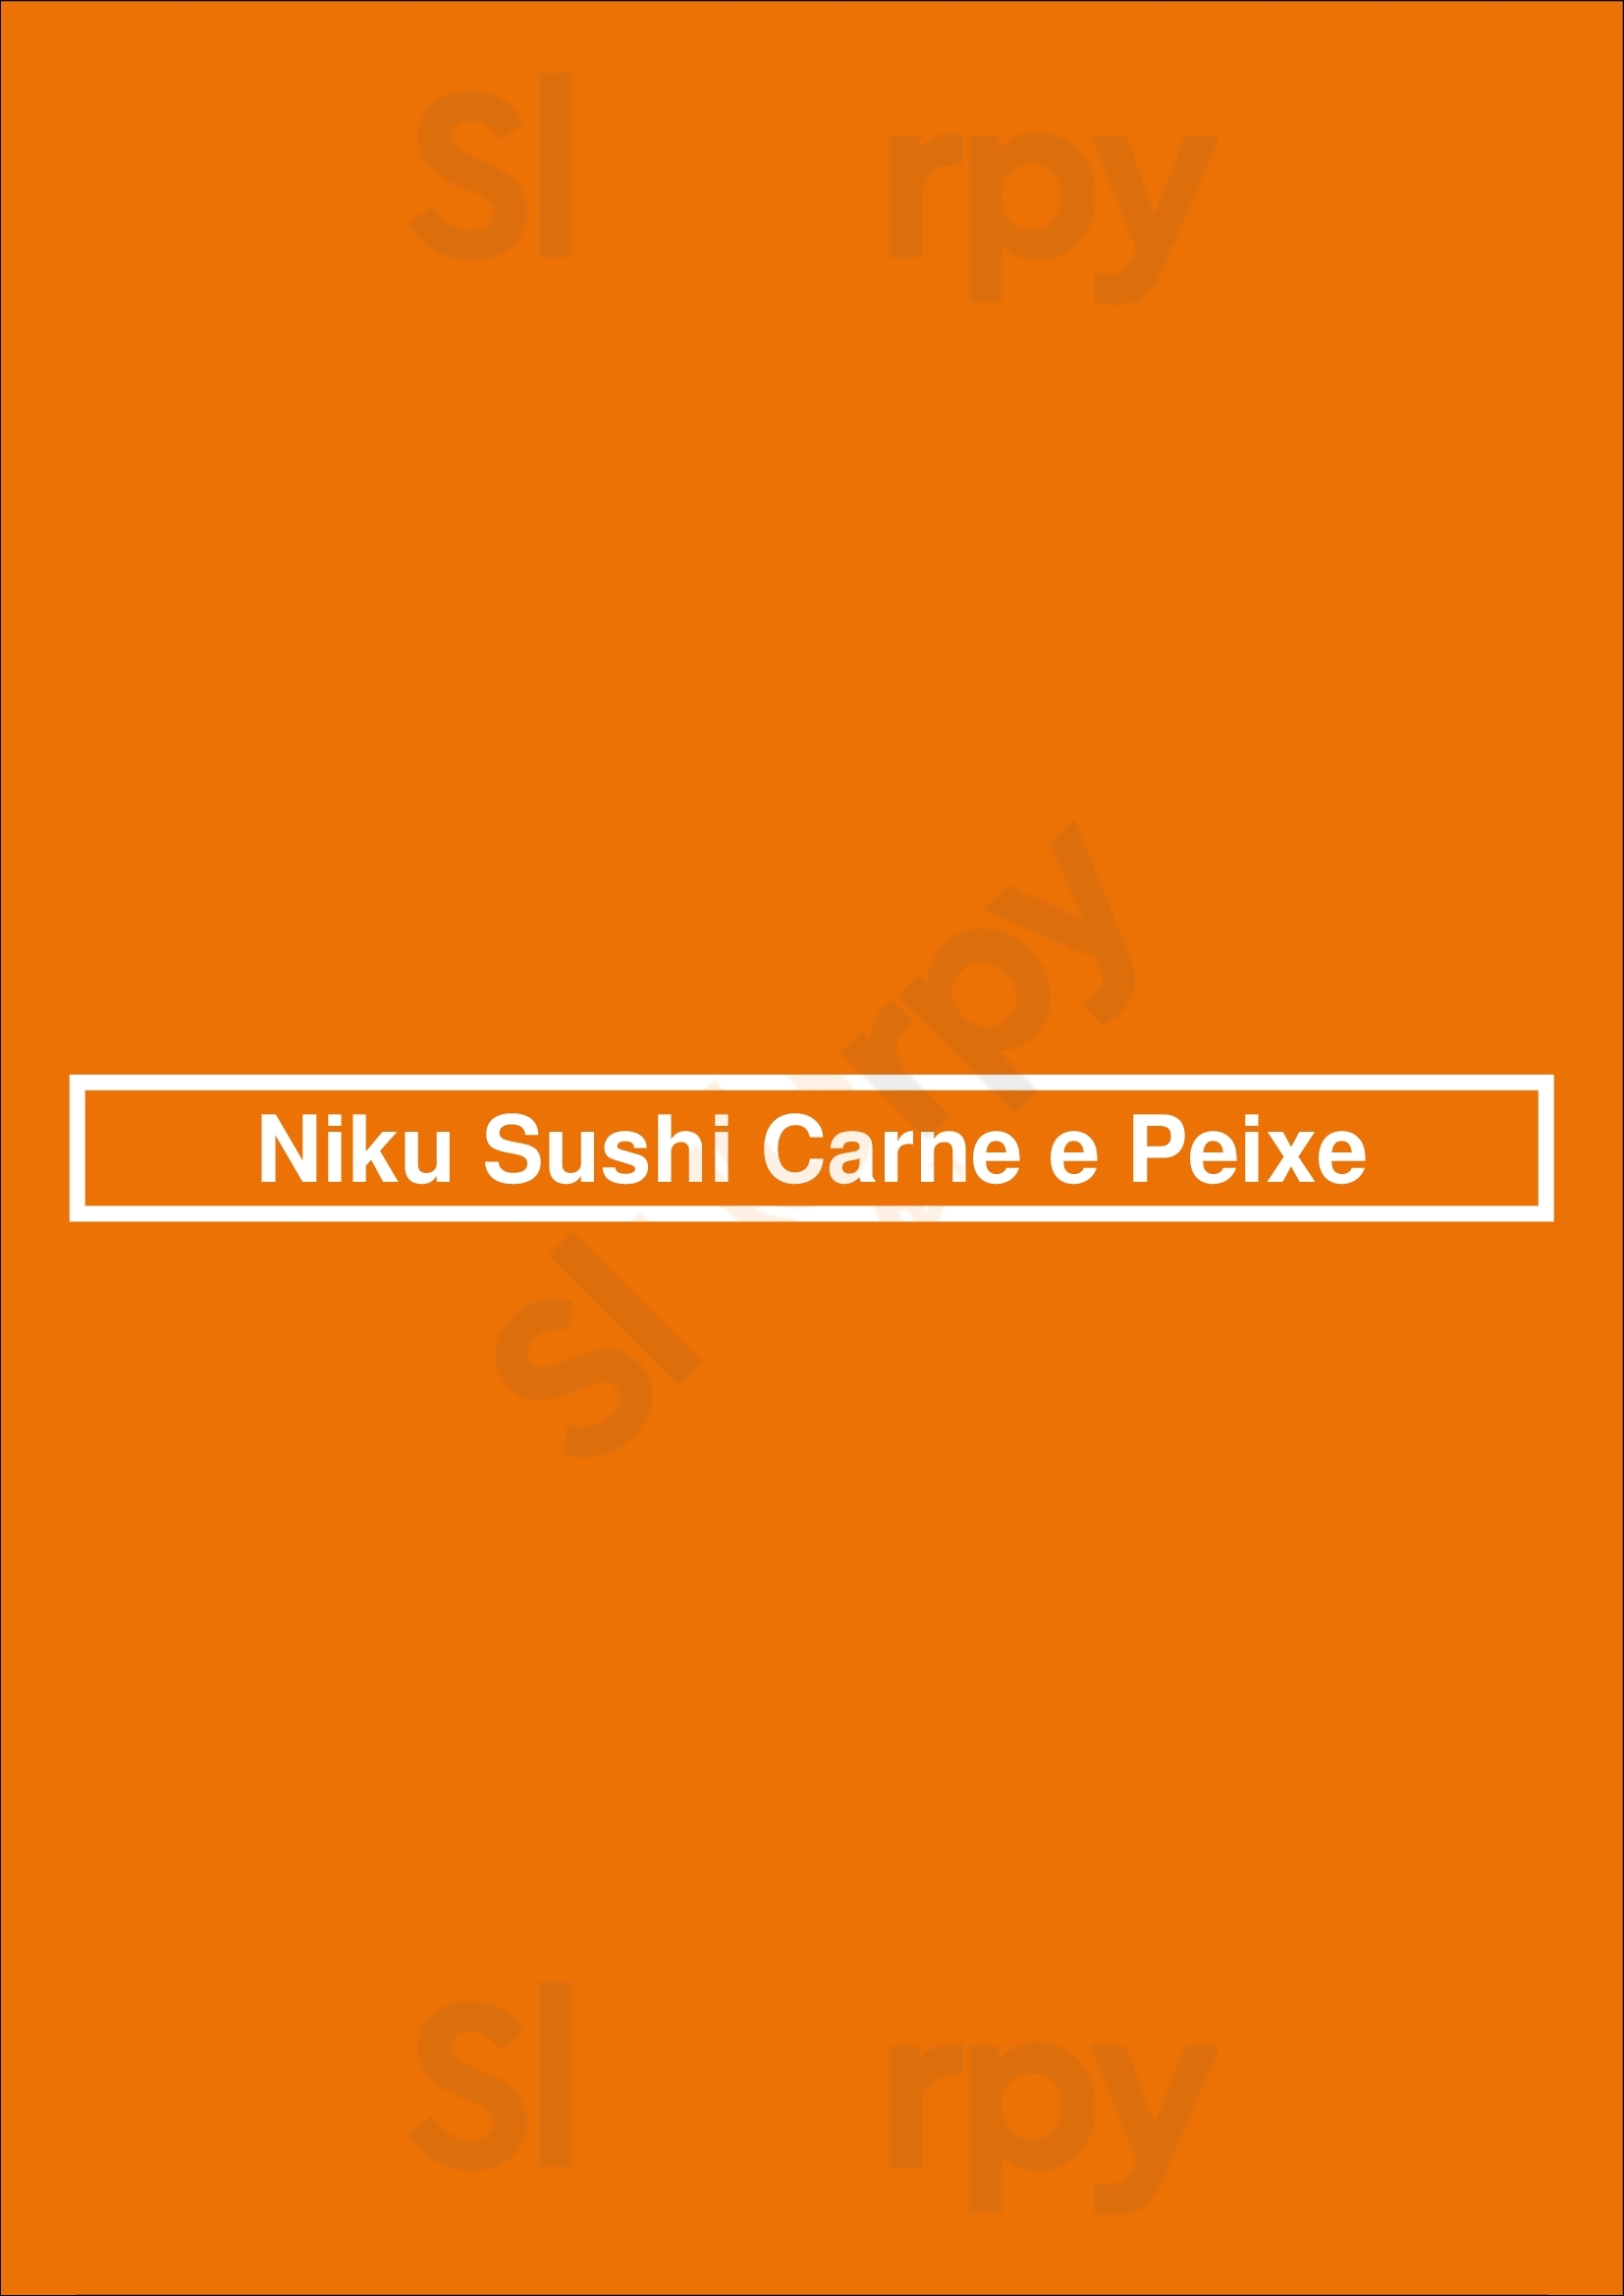 Niku Sushi Carne E Peixe Porto Menu - 1